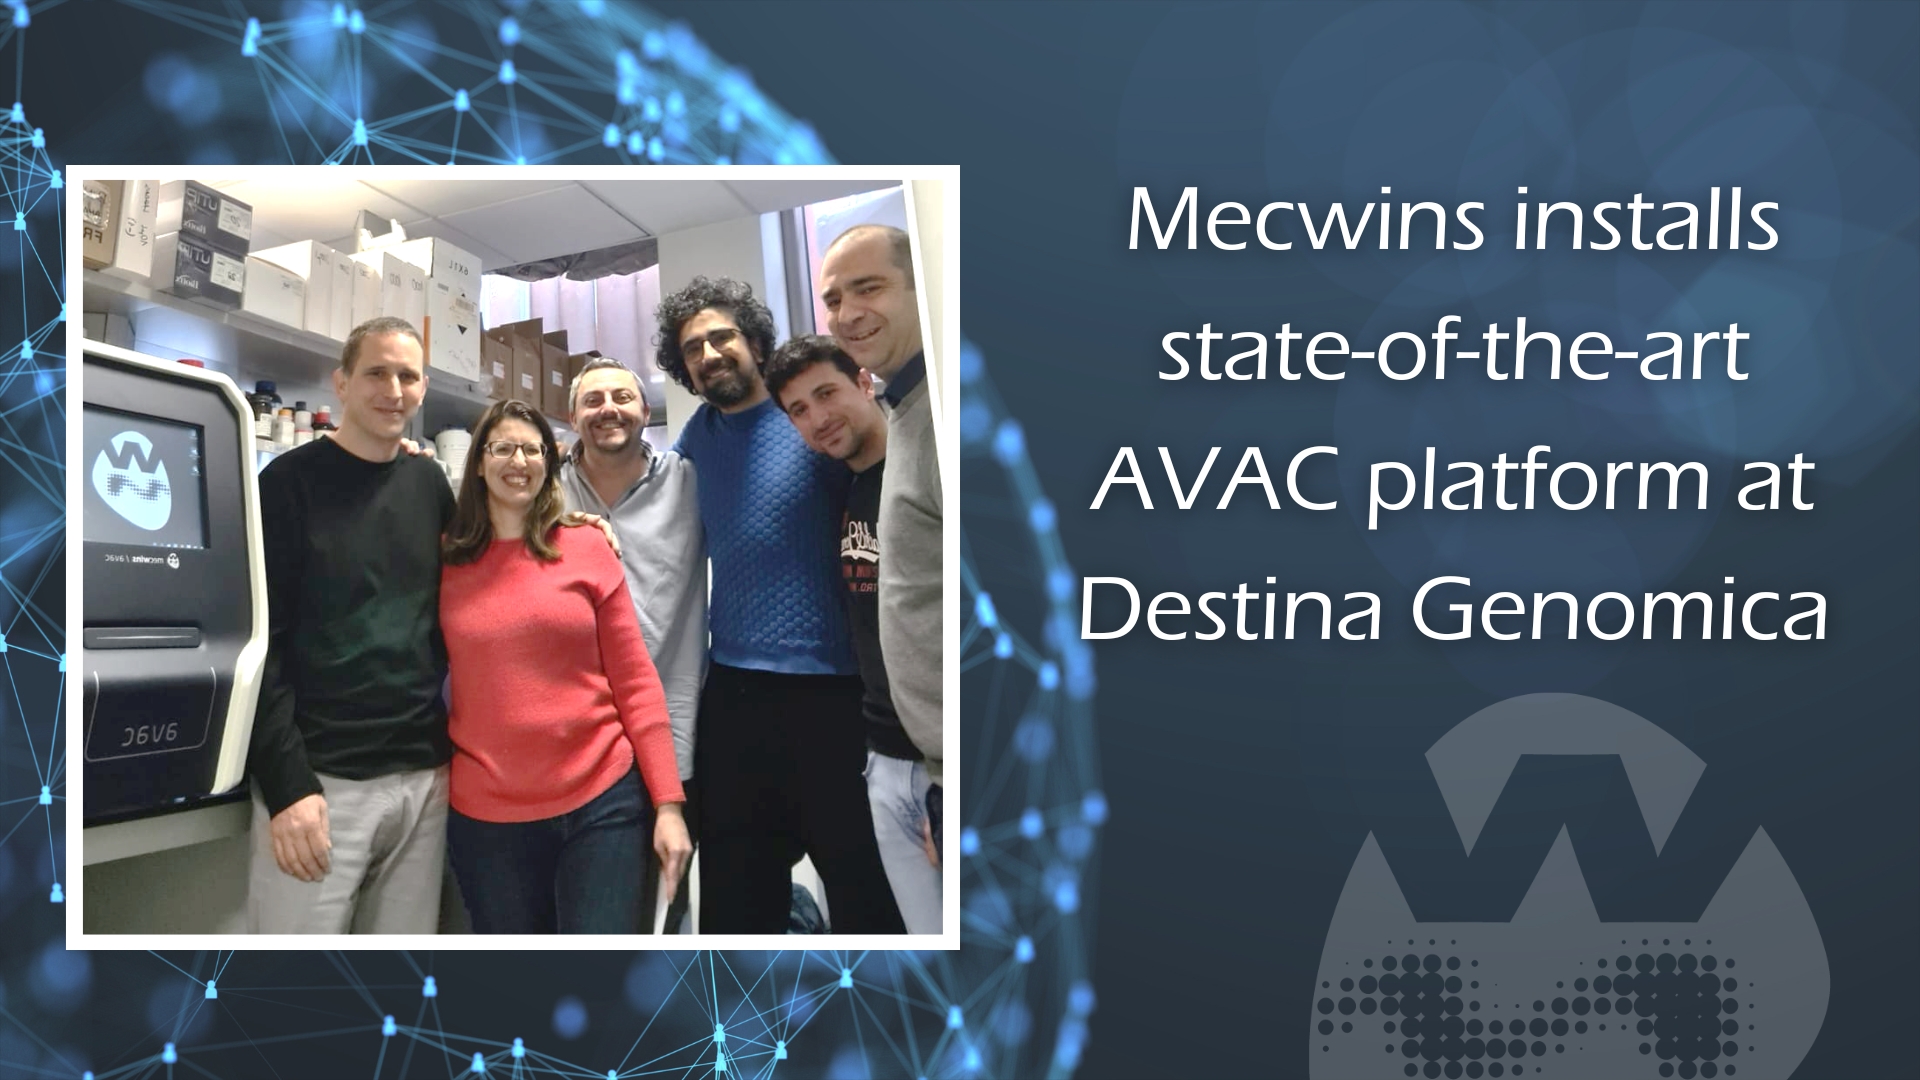 Mecwins installs state-of-the-art AVAC platform at Destina Genomica